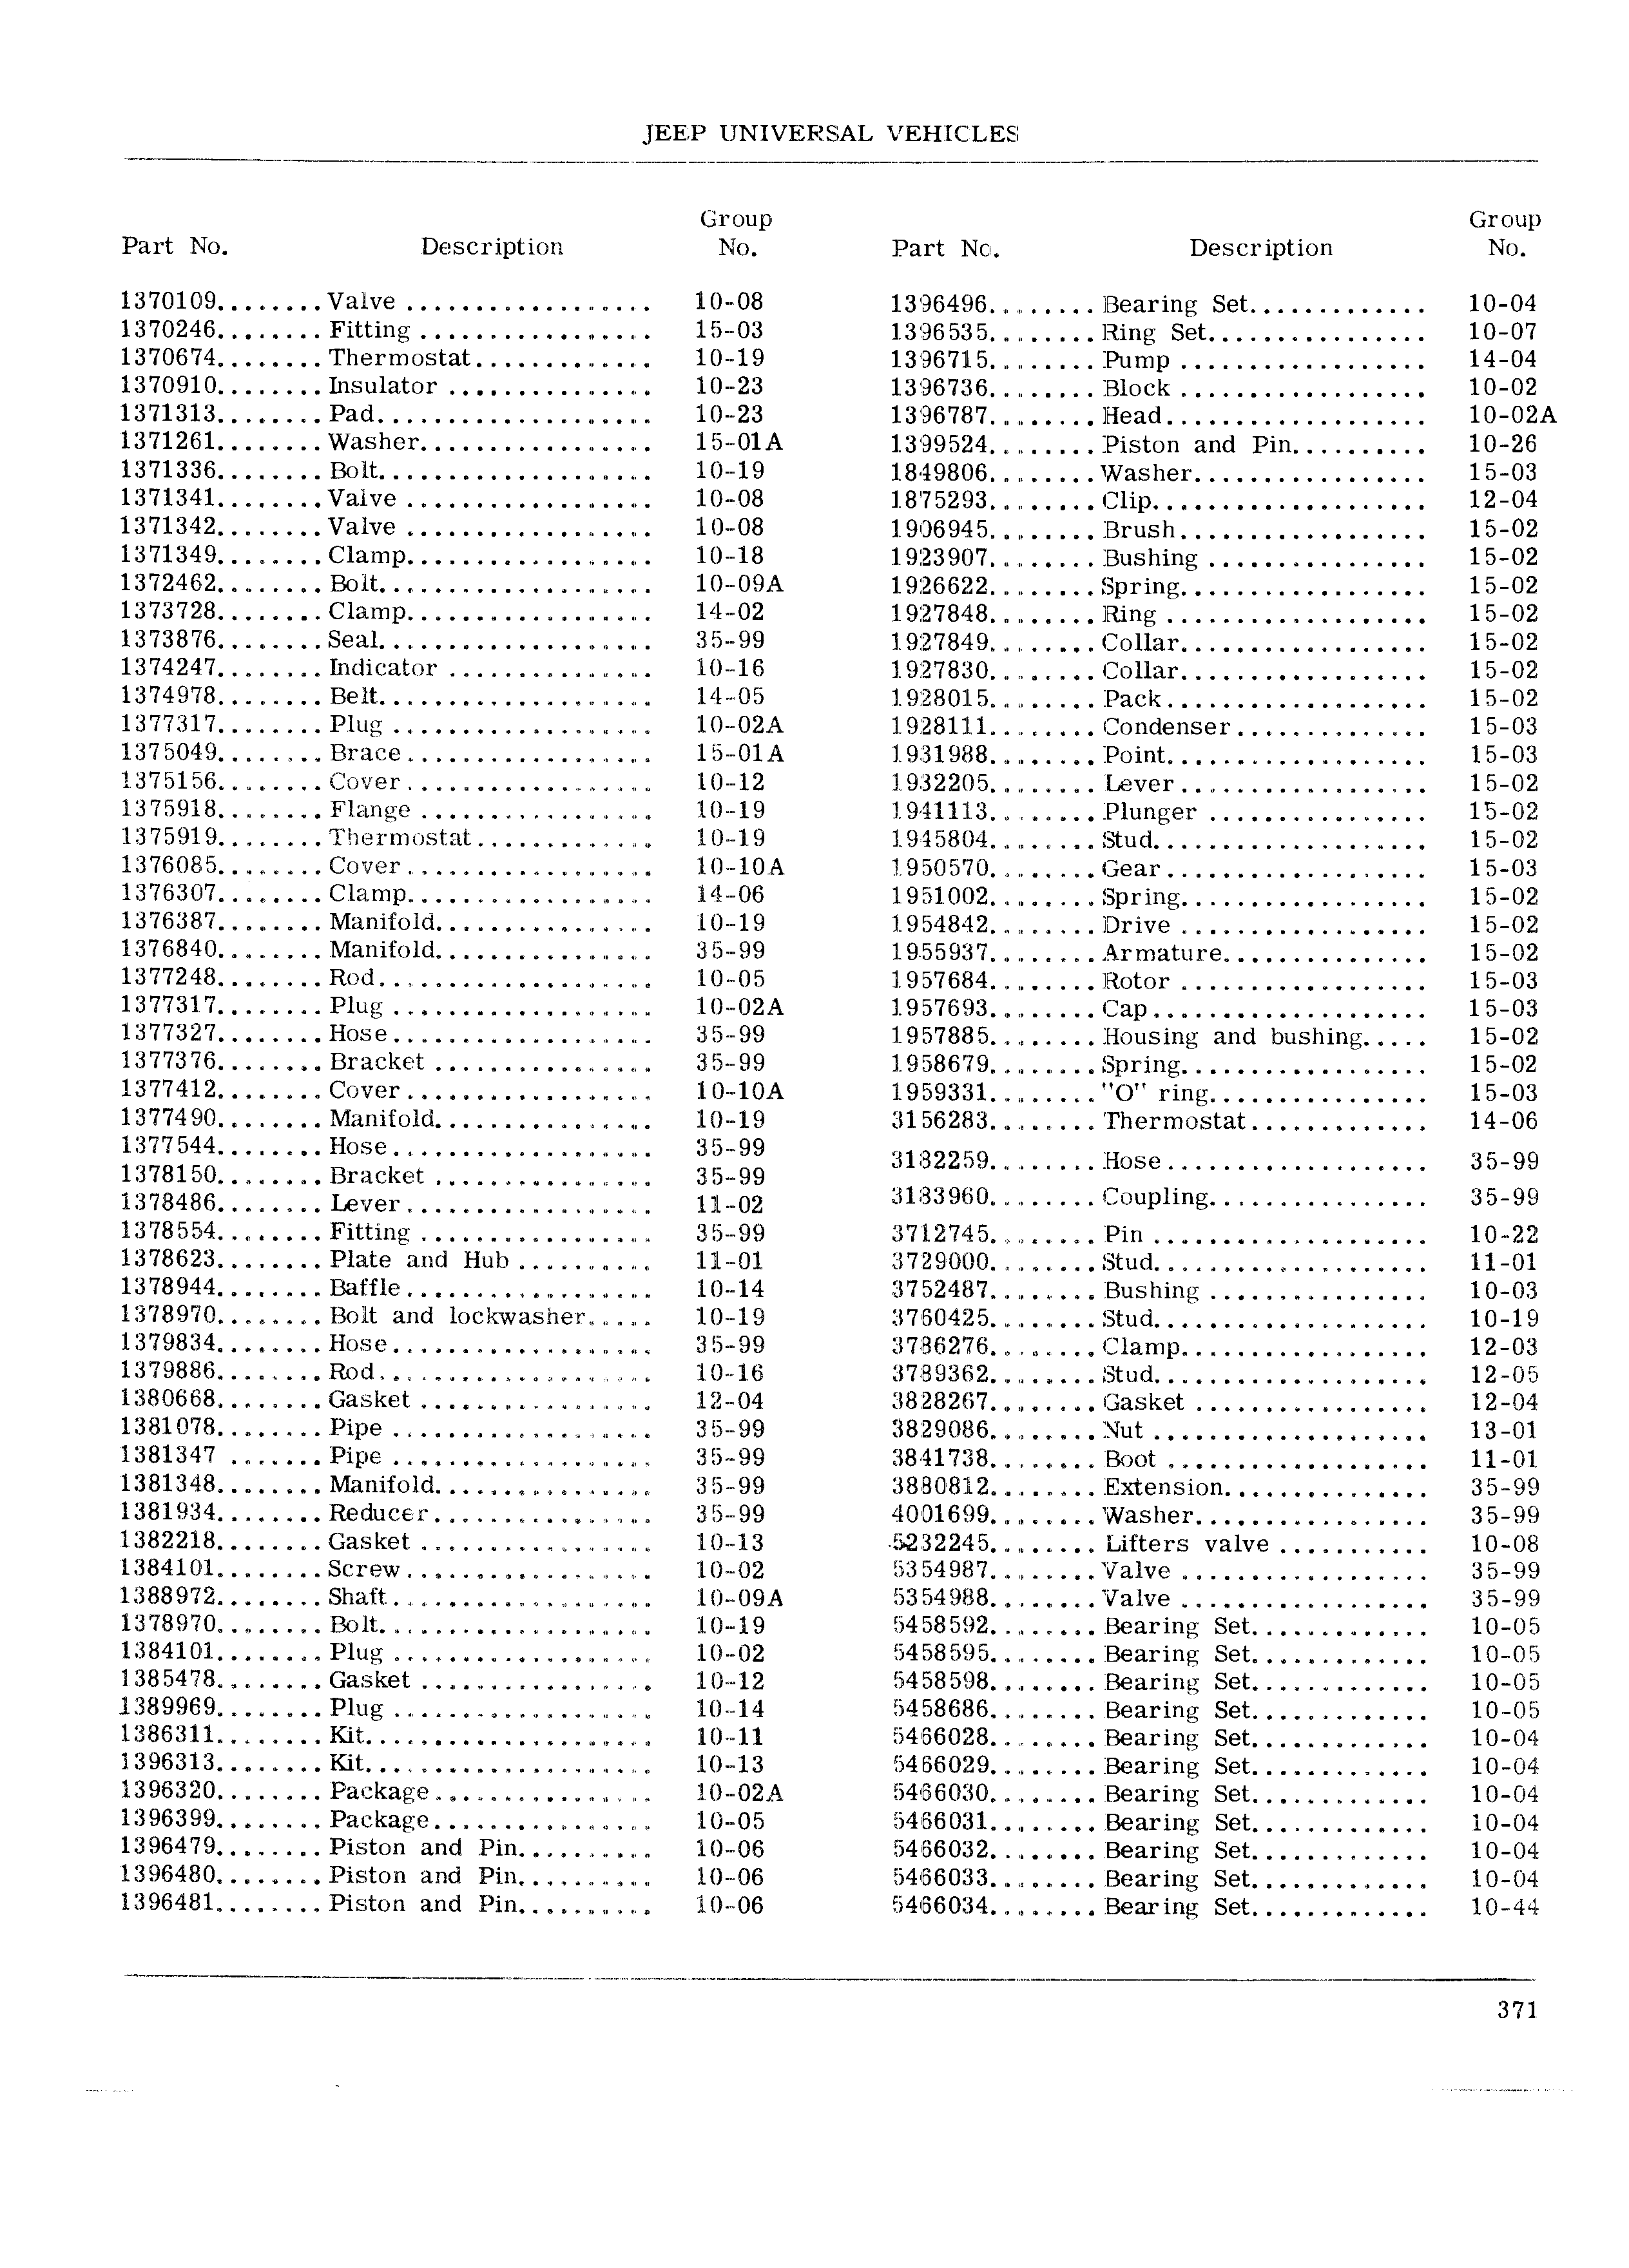 Jeep Universal Parts List December 1967